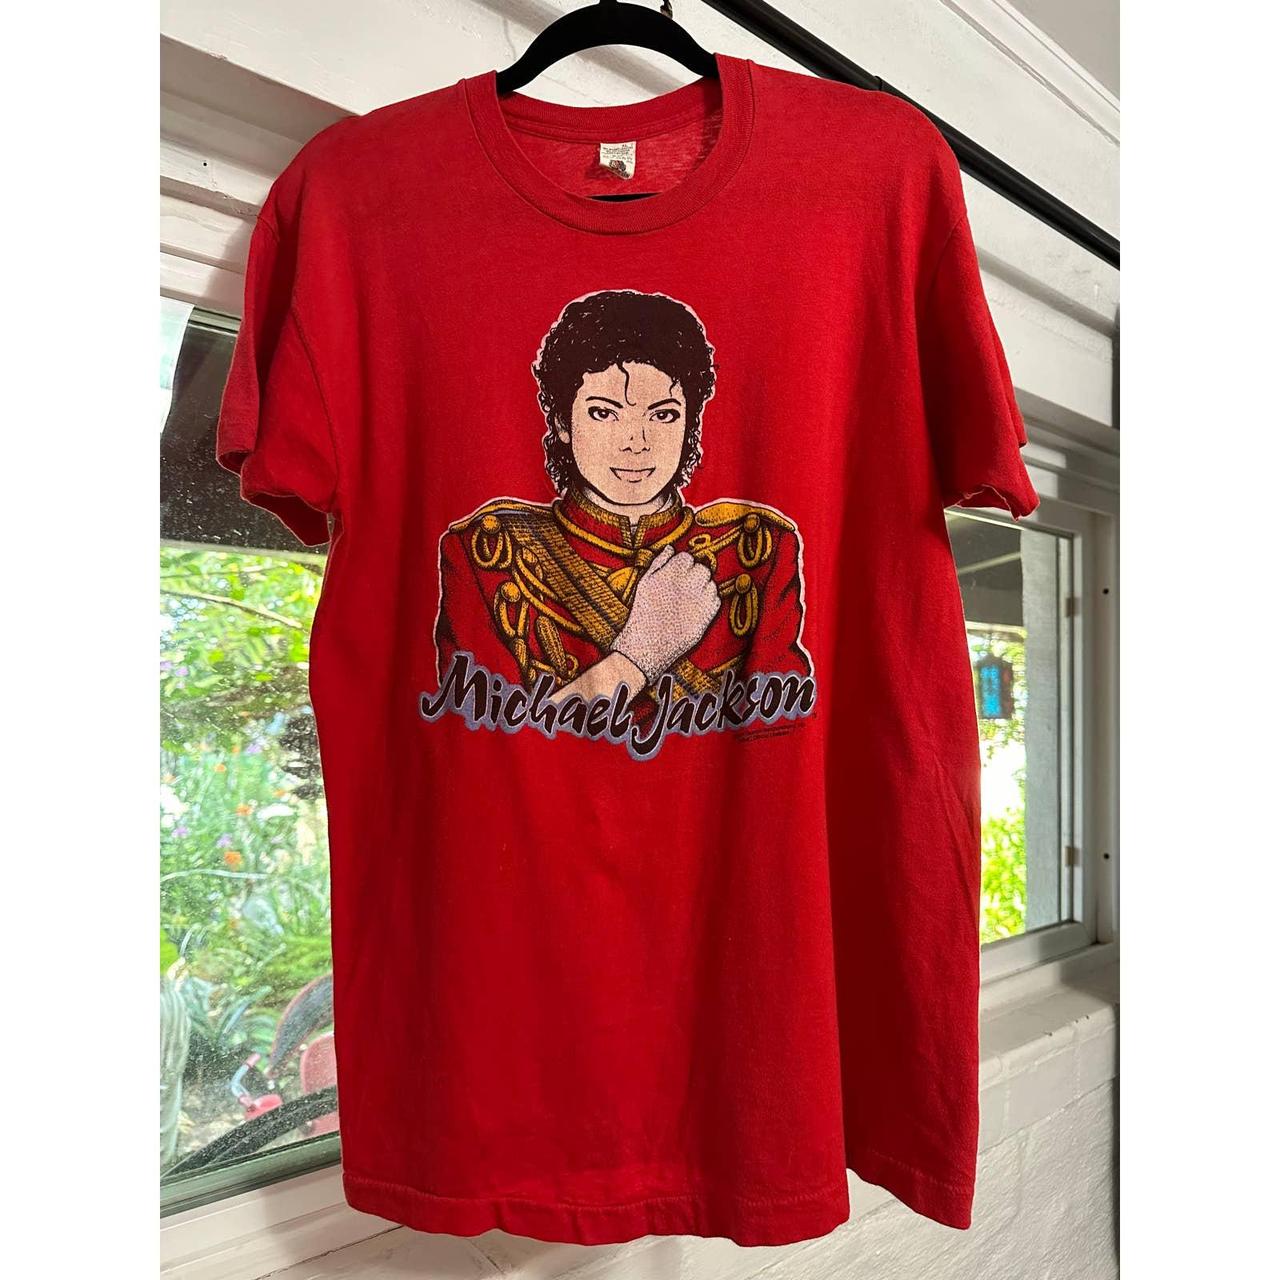 Michael Jackson - New Vintage Band T shirt - Vintage Band Shirts